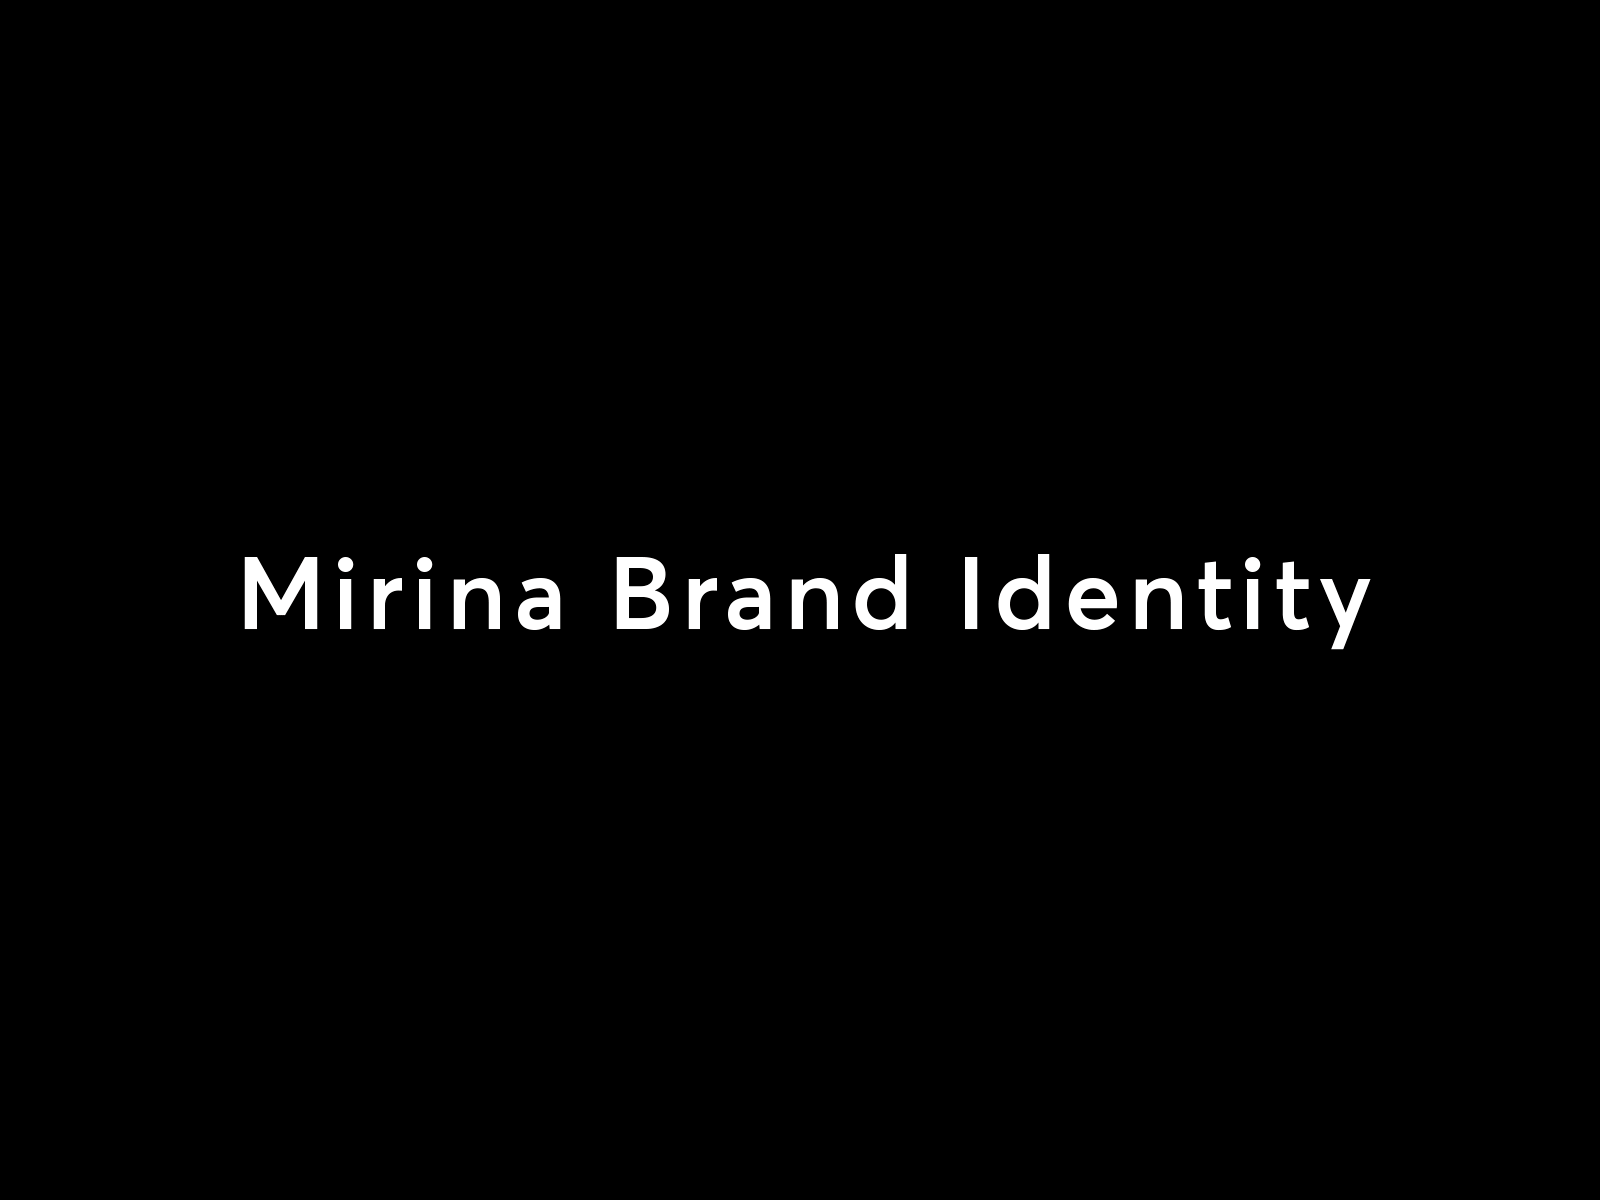 Mirina Branding